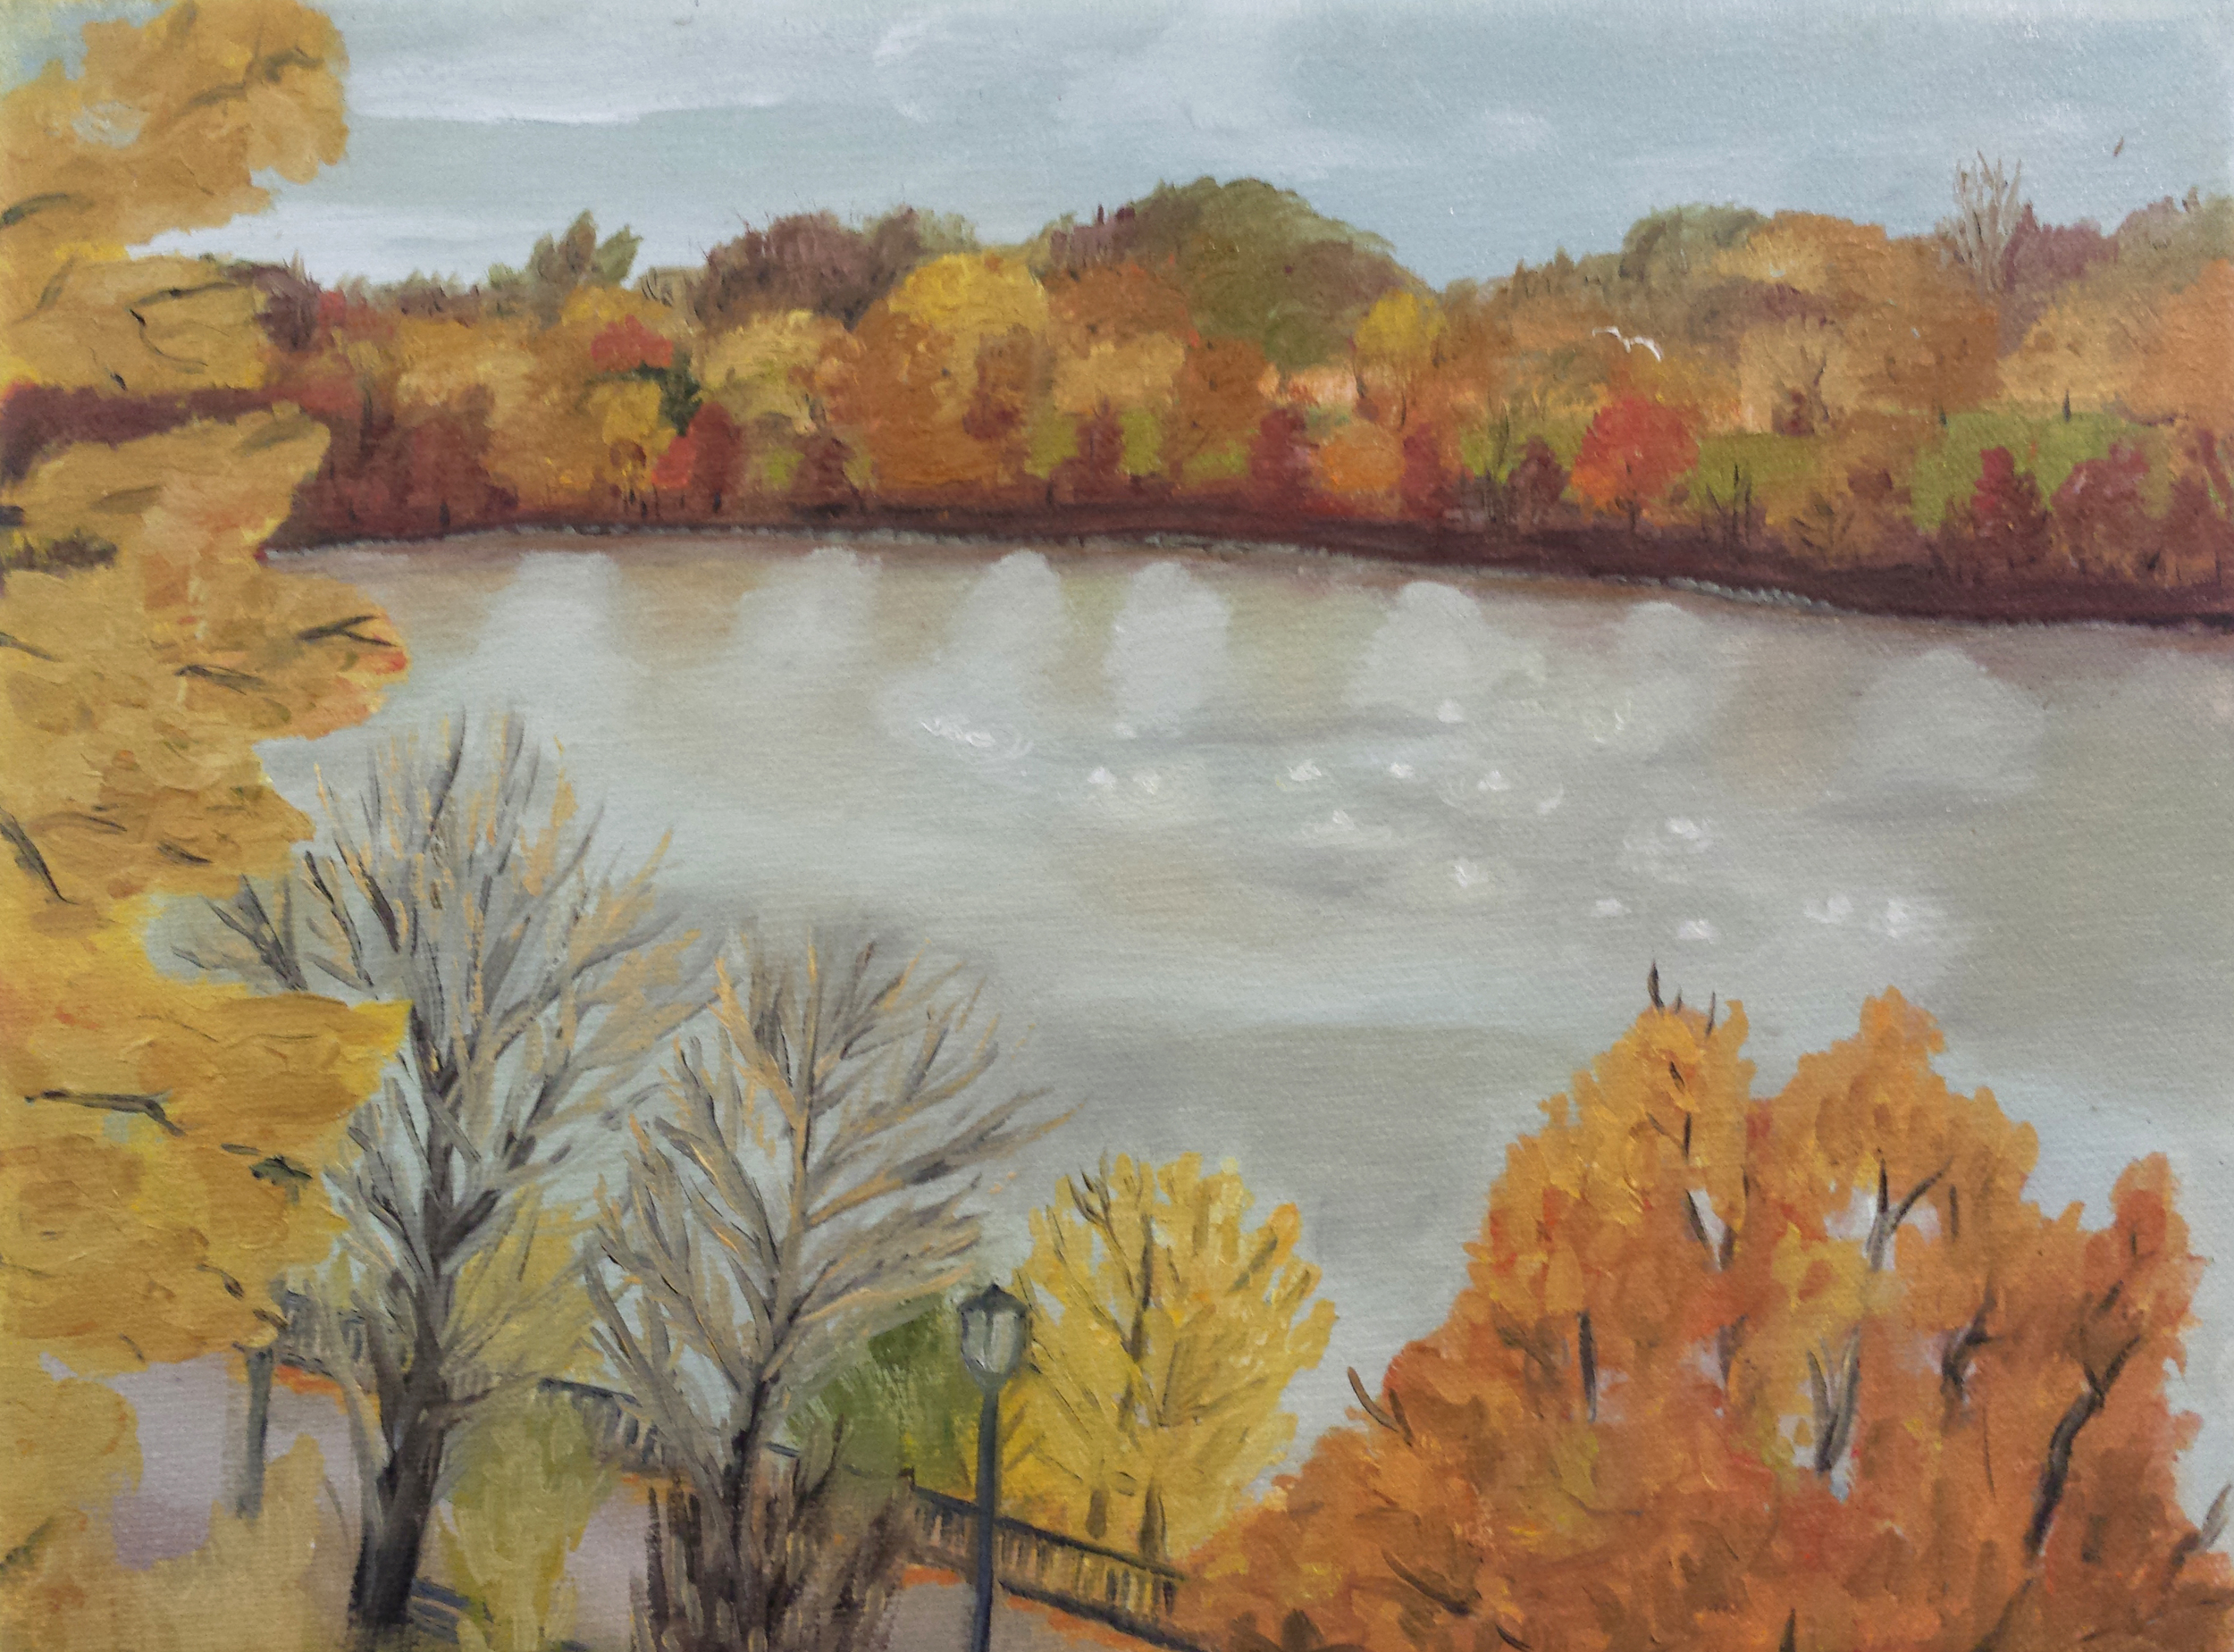 2013-Autumnal-View-of-Silver-Lake-painting-by-Ingrid-Alvarez.jpg